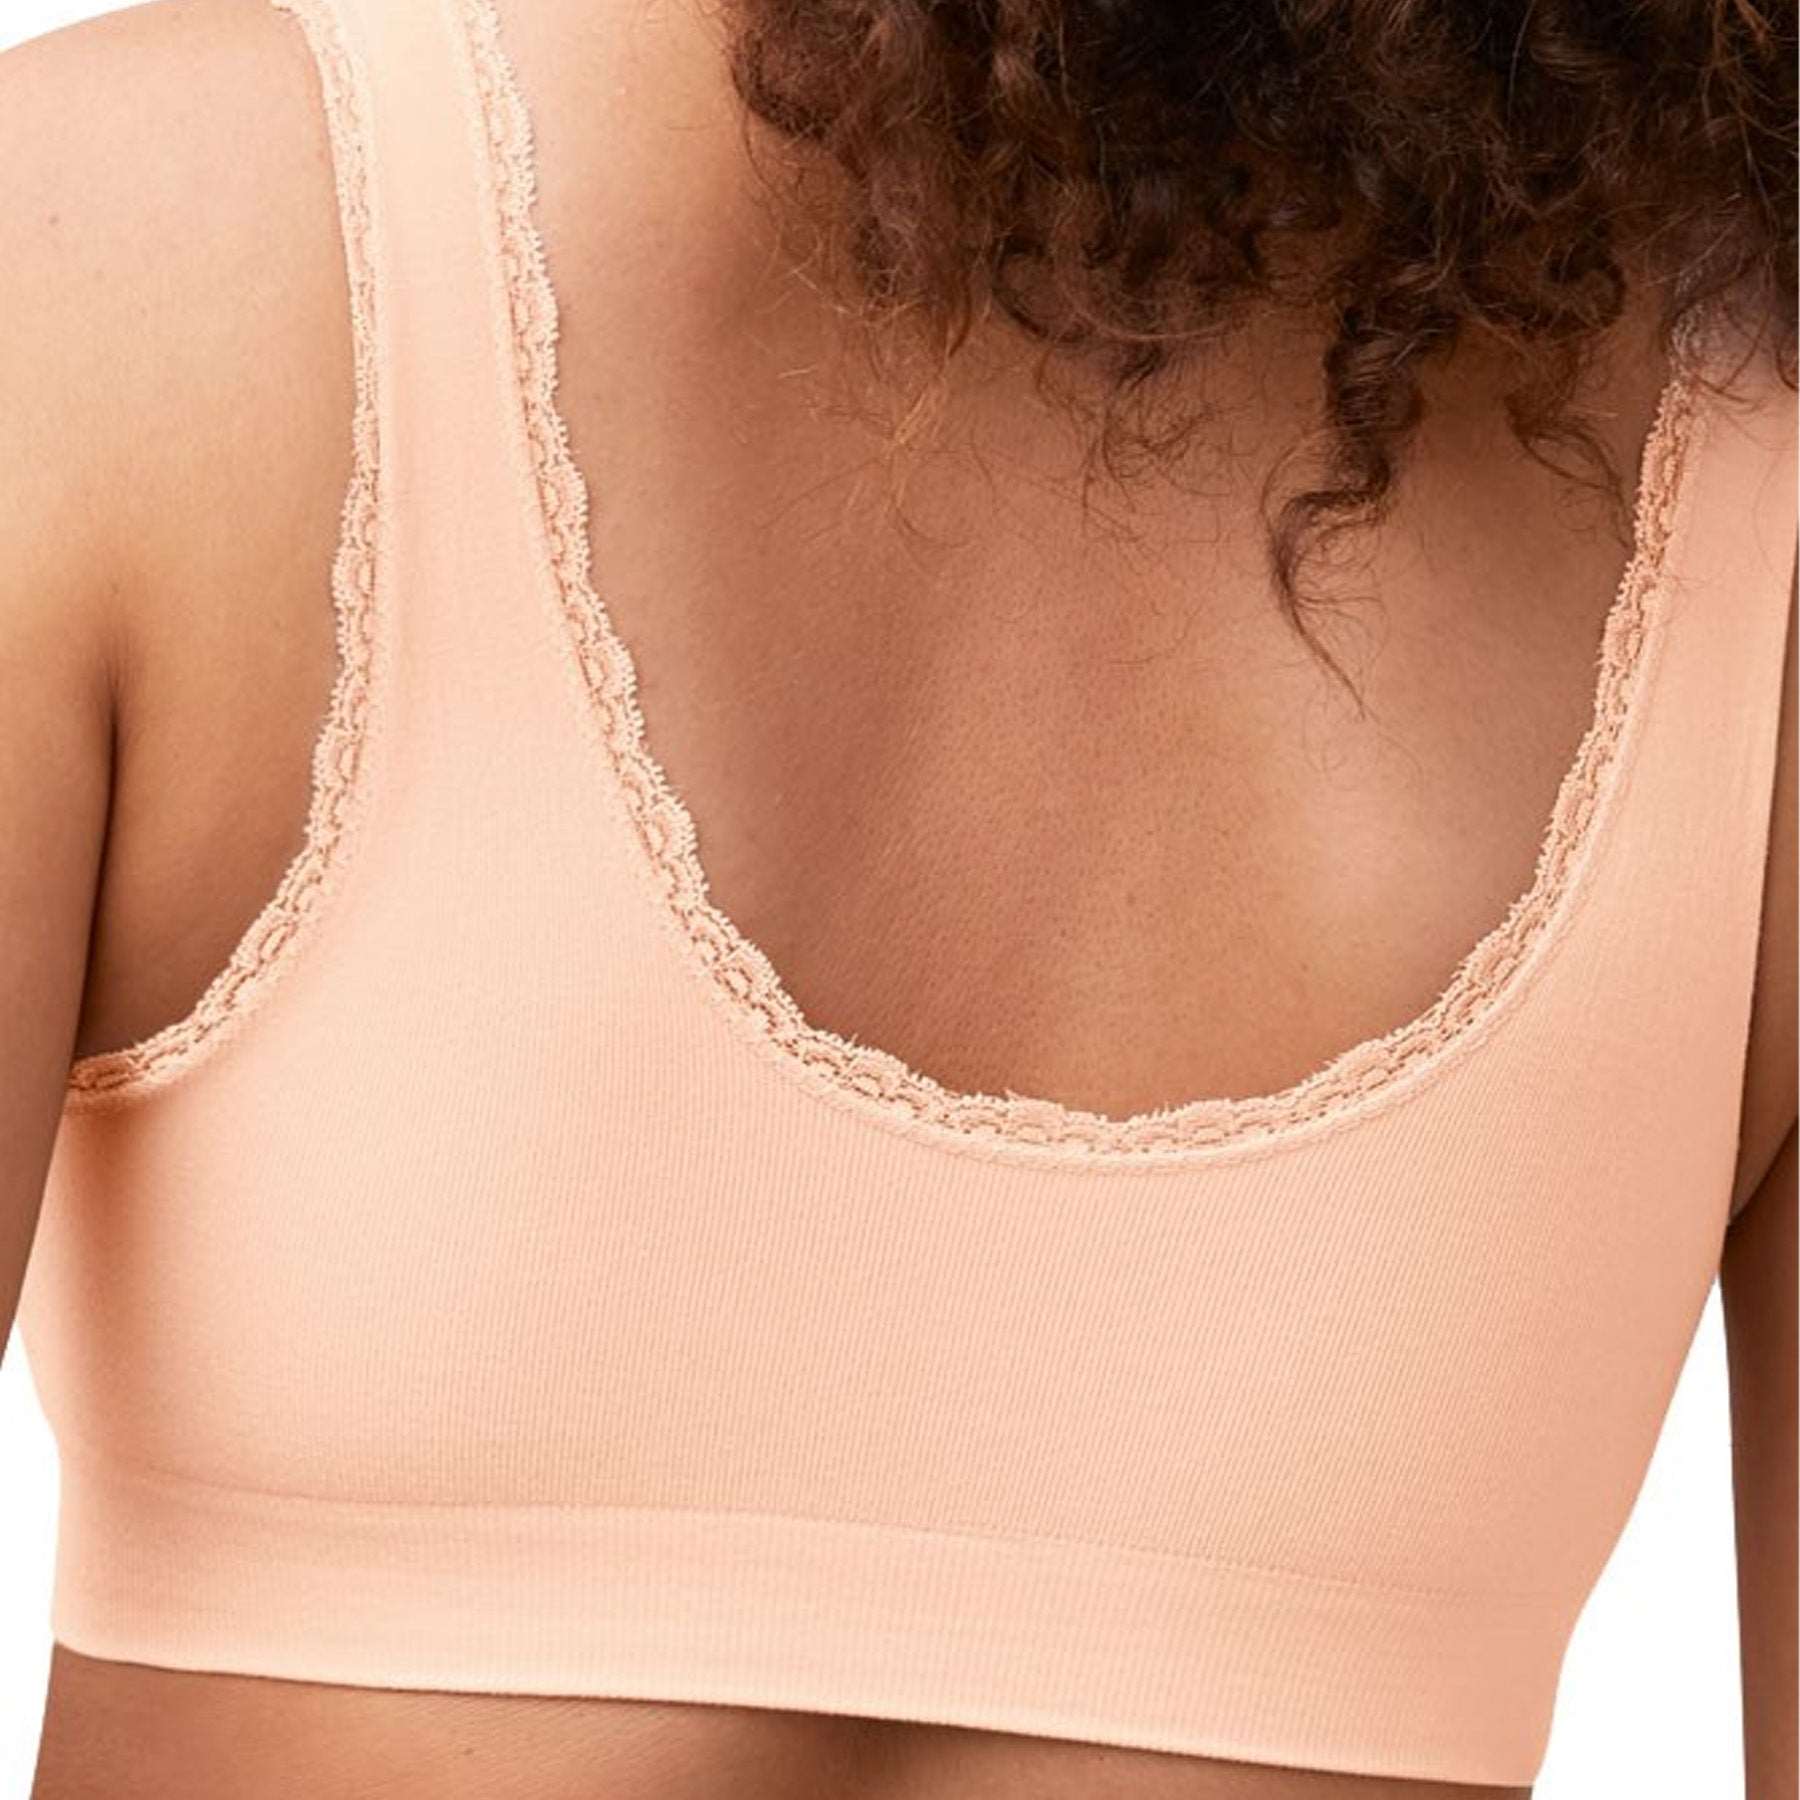 leather bra wireless bras for women support padded shelf bra camisole for women  push up wireless bra C Small